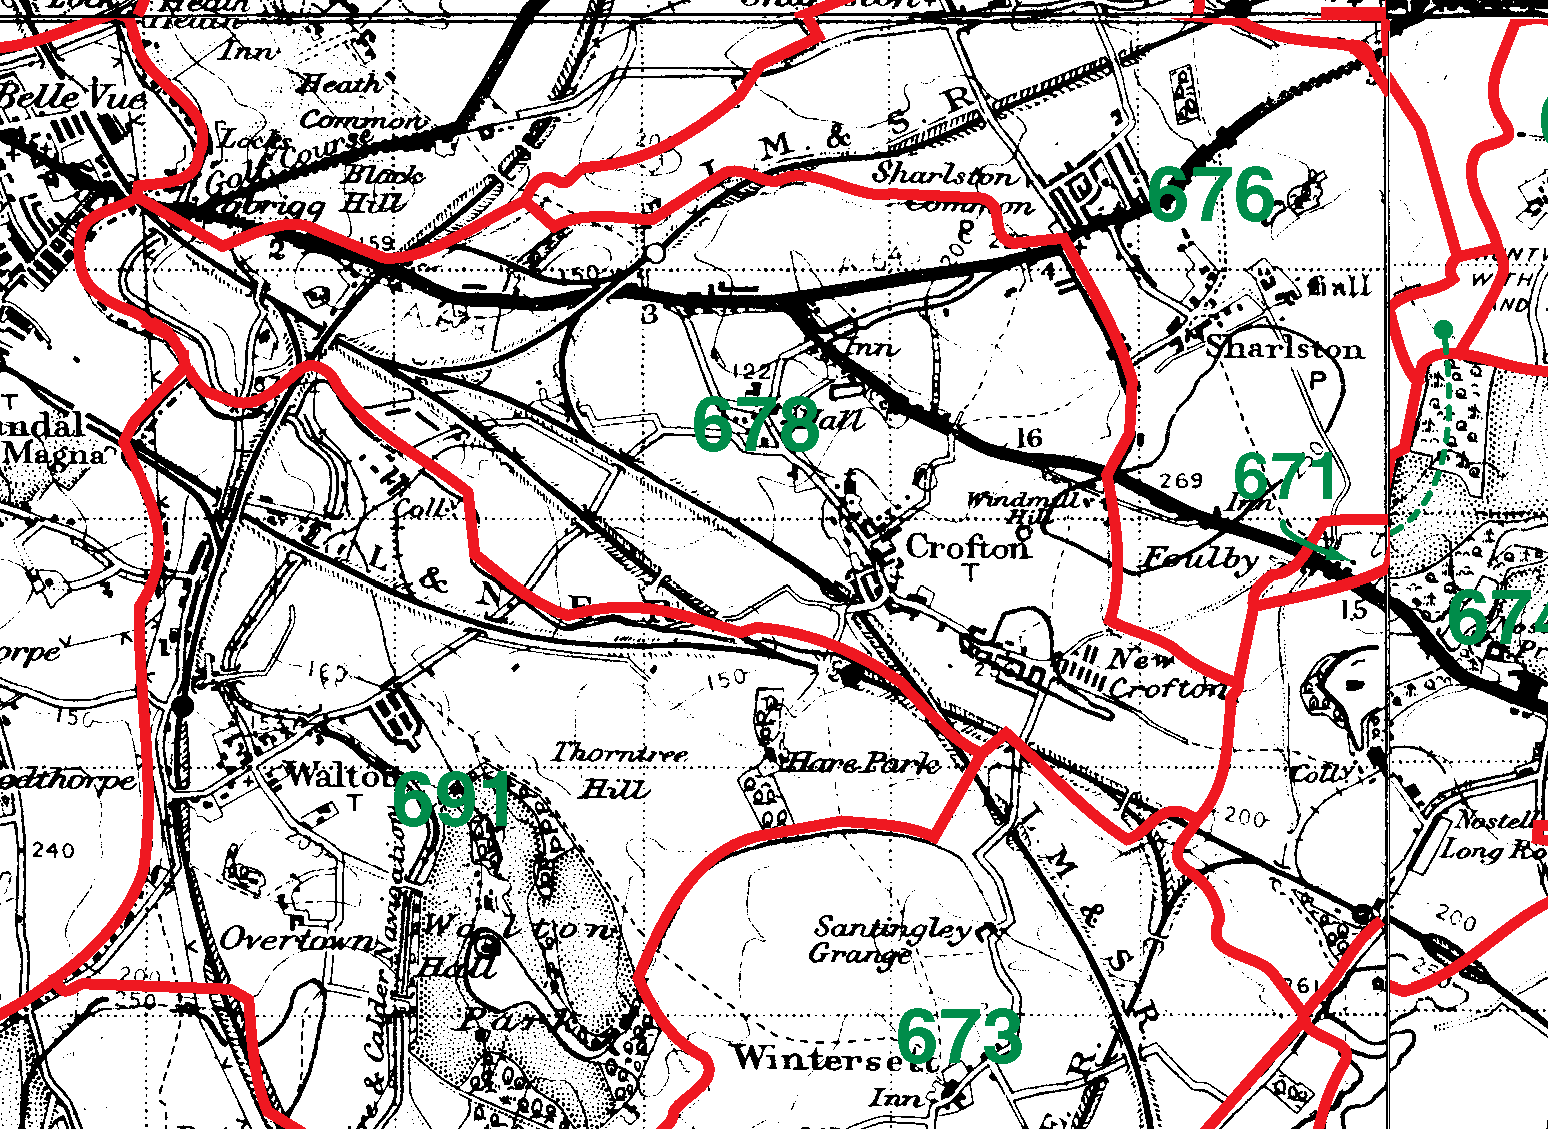 Crofton boundaries map